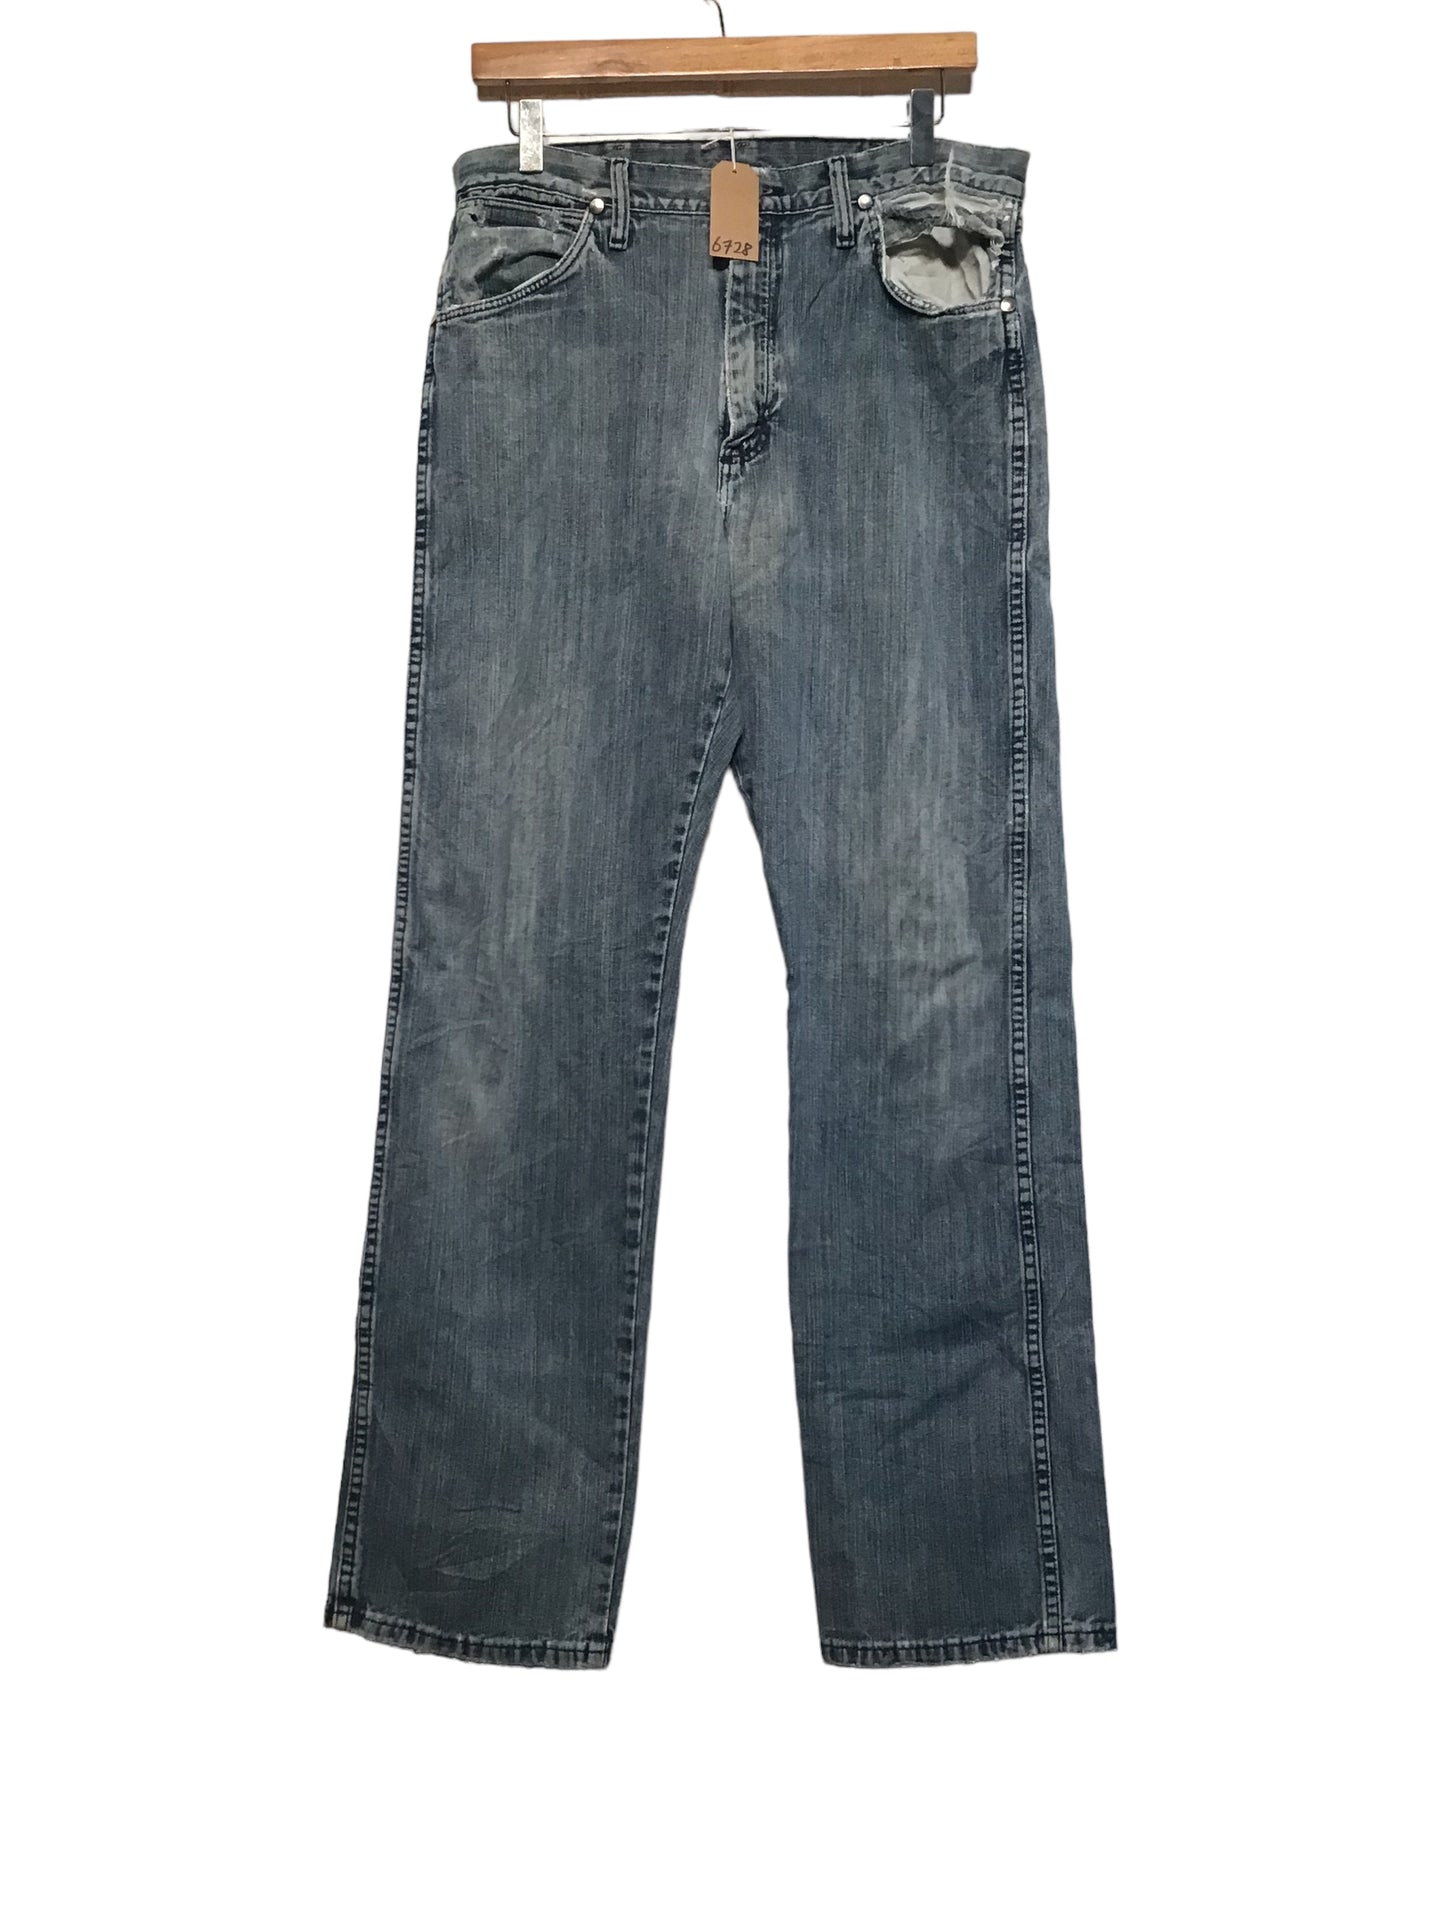 Wrangler Jeans (34x32)